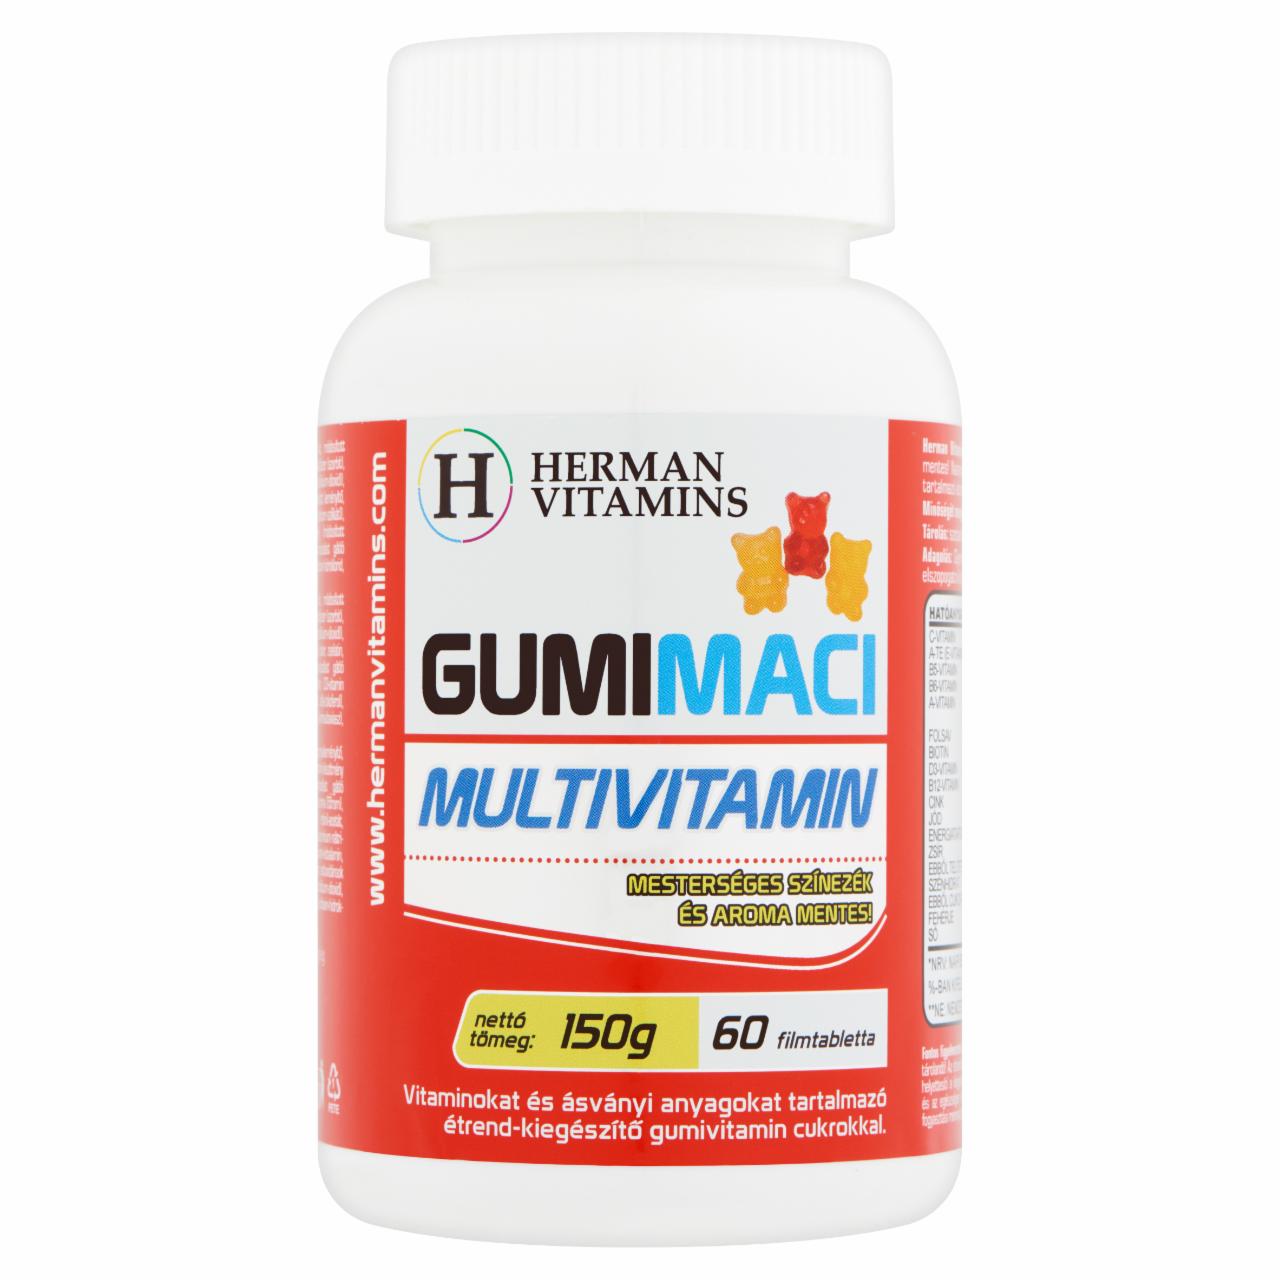 Képek - Herman Vitamins Gumimaci Multivitamin étrend-kiegészítő gumivitamin 60 db 150 g